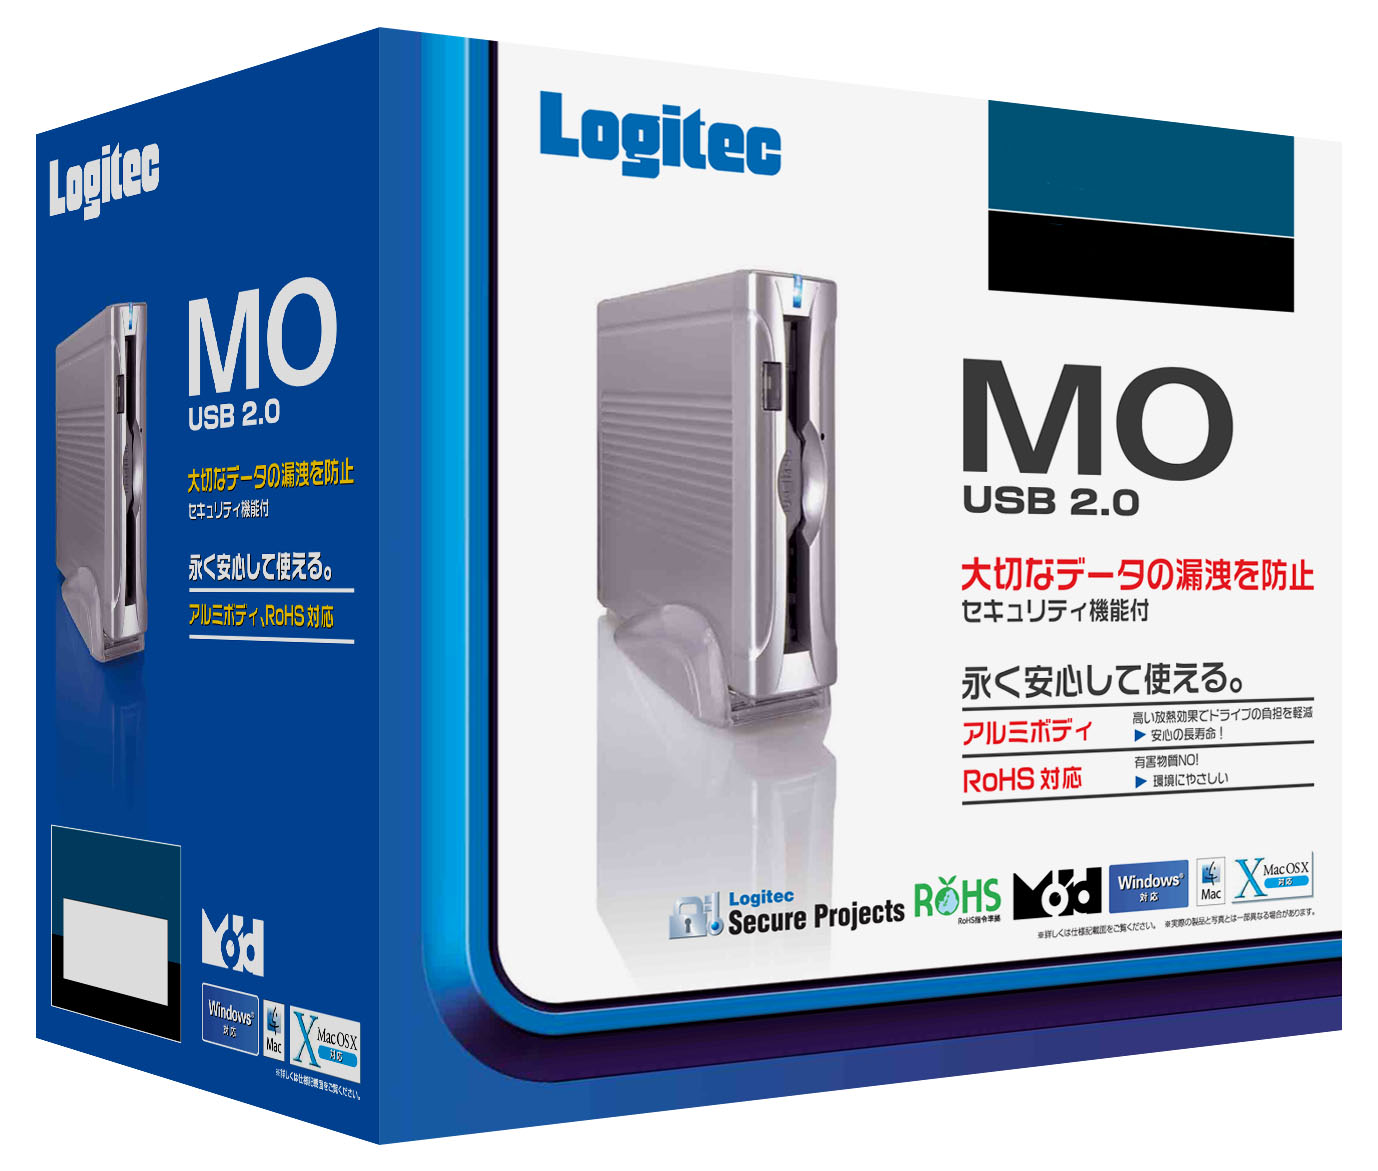 Logitec ロジテック 640MB MOドライブ LMO-PBB640U2